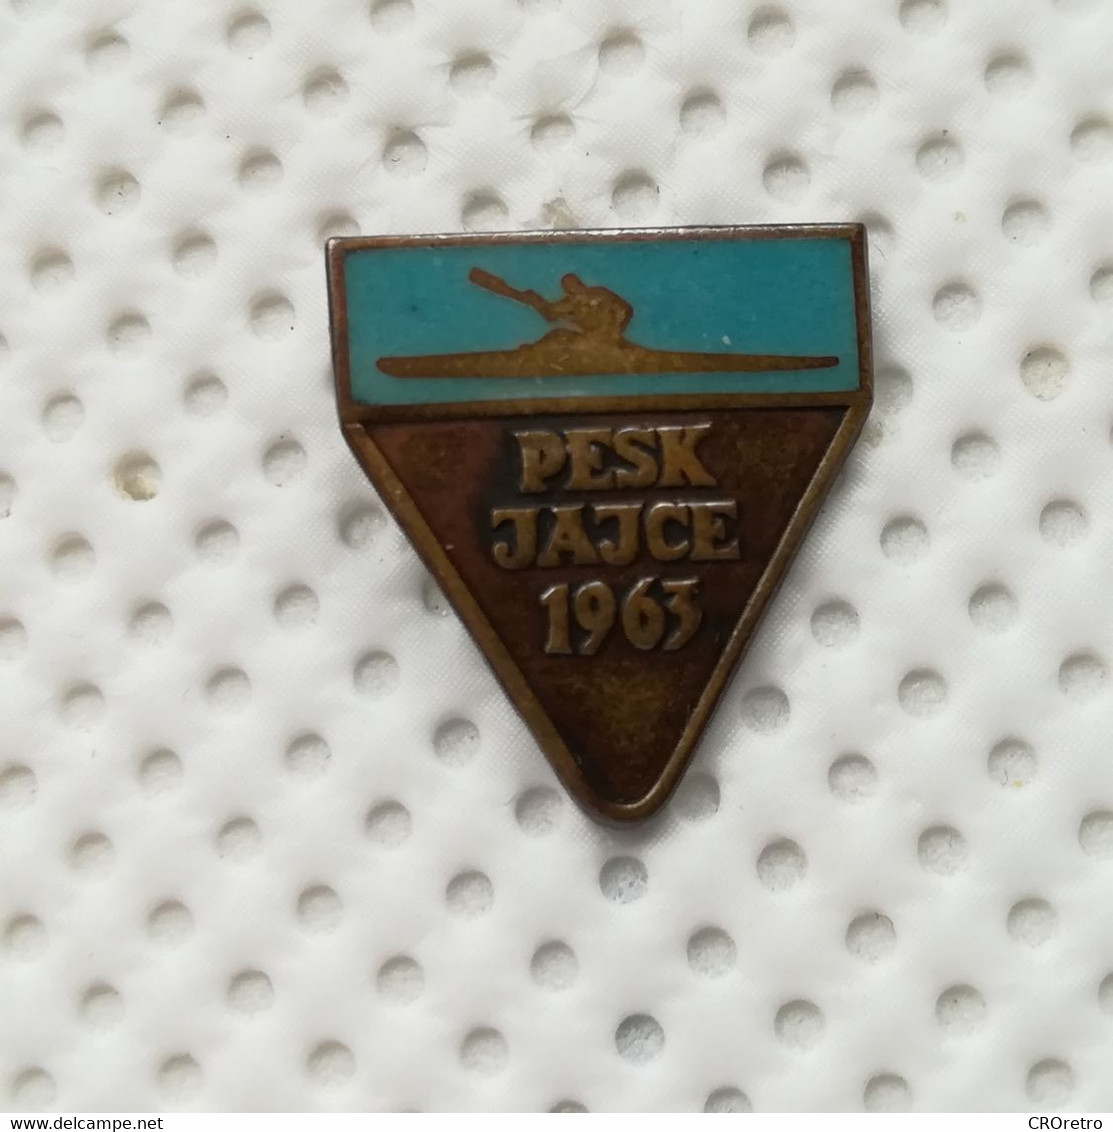 Rowing, Kayak, Canoe - PESK JAJCE 1963 YUGOSLAVIA, World Championship, Enamel Badge, Pin - Rowing